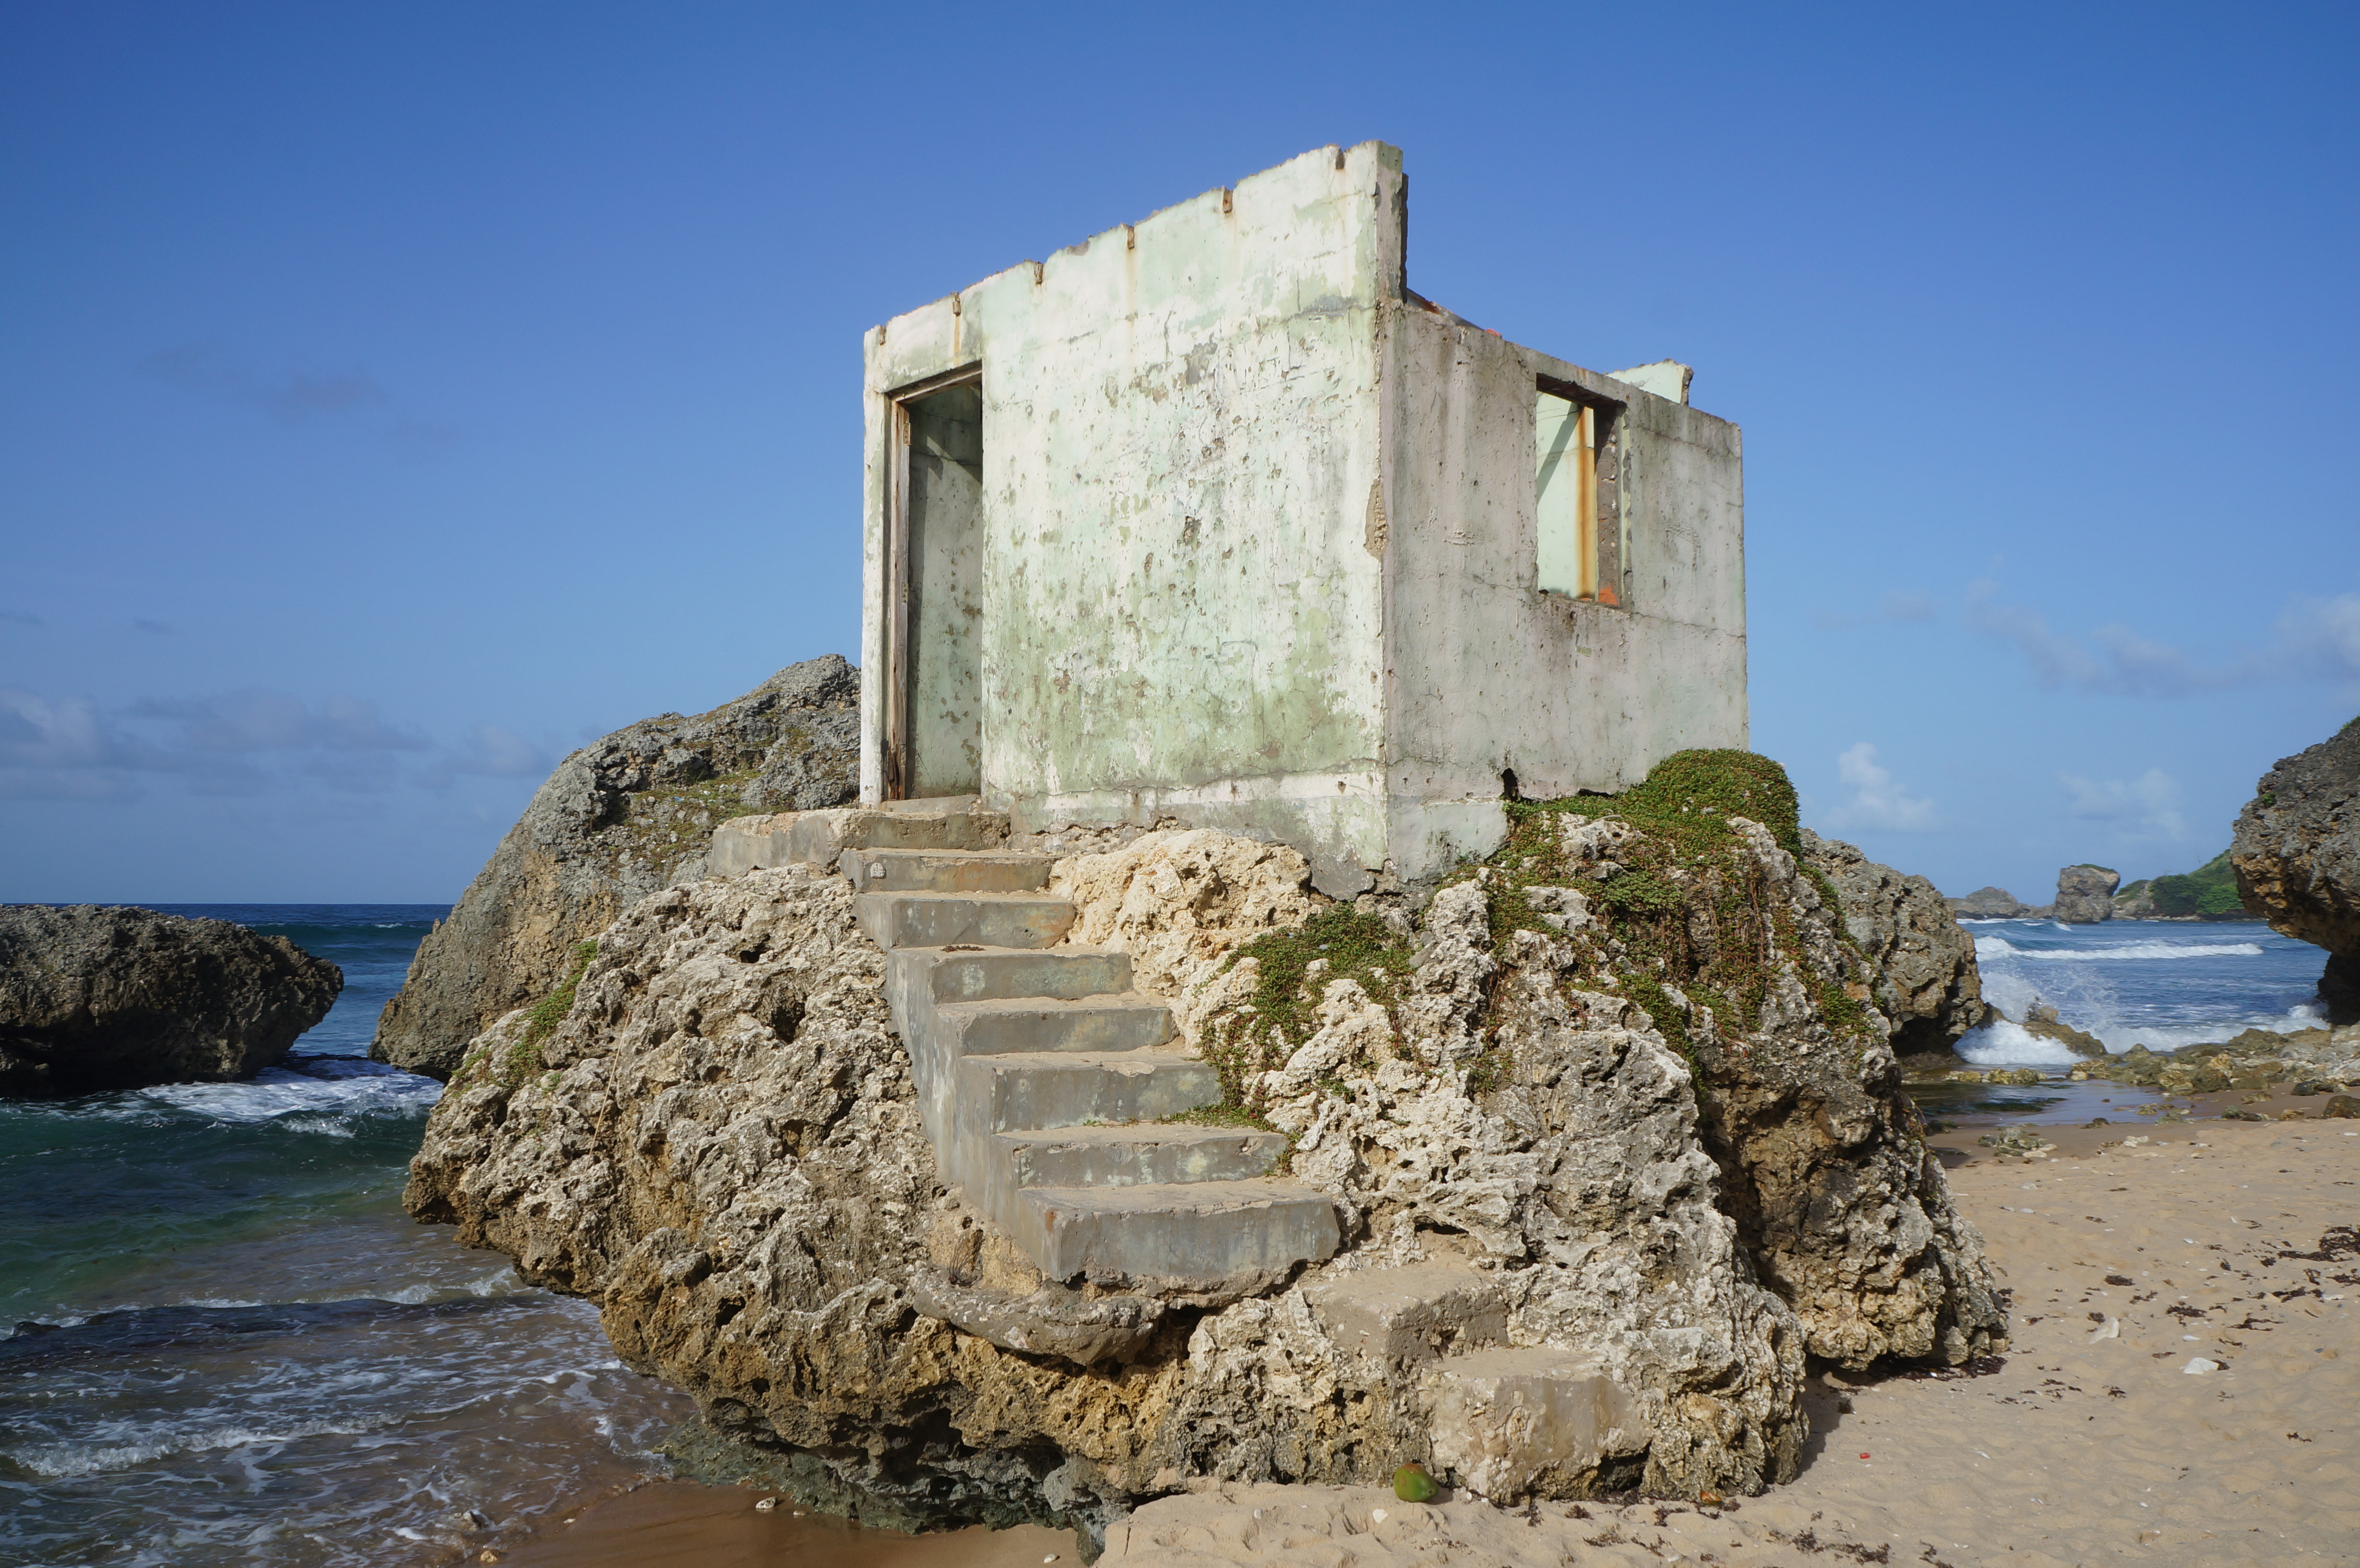 File:Abandoned Stone House, Bathsheba, Barbados.JPG - Wikimedia Commons